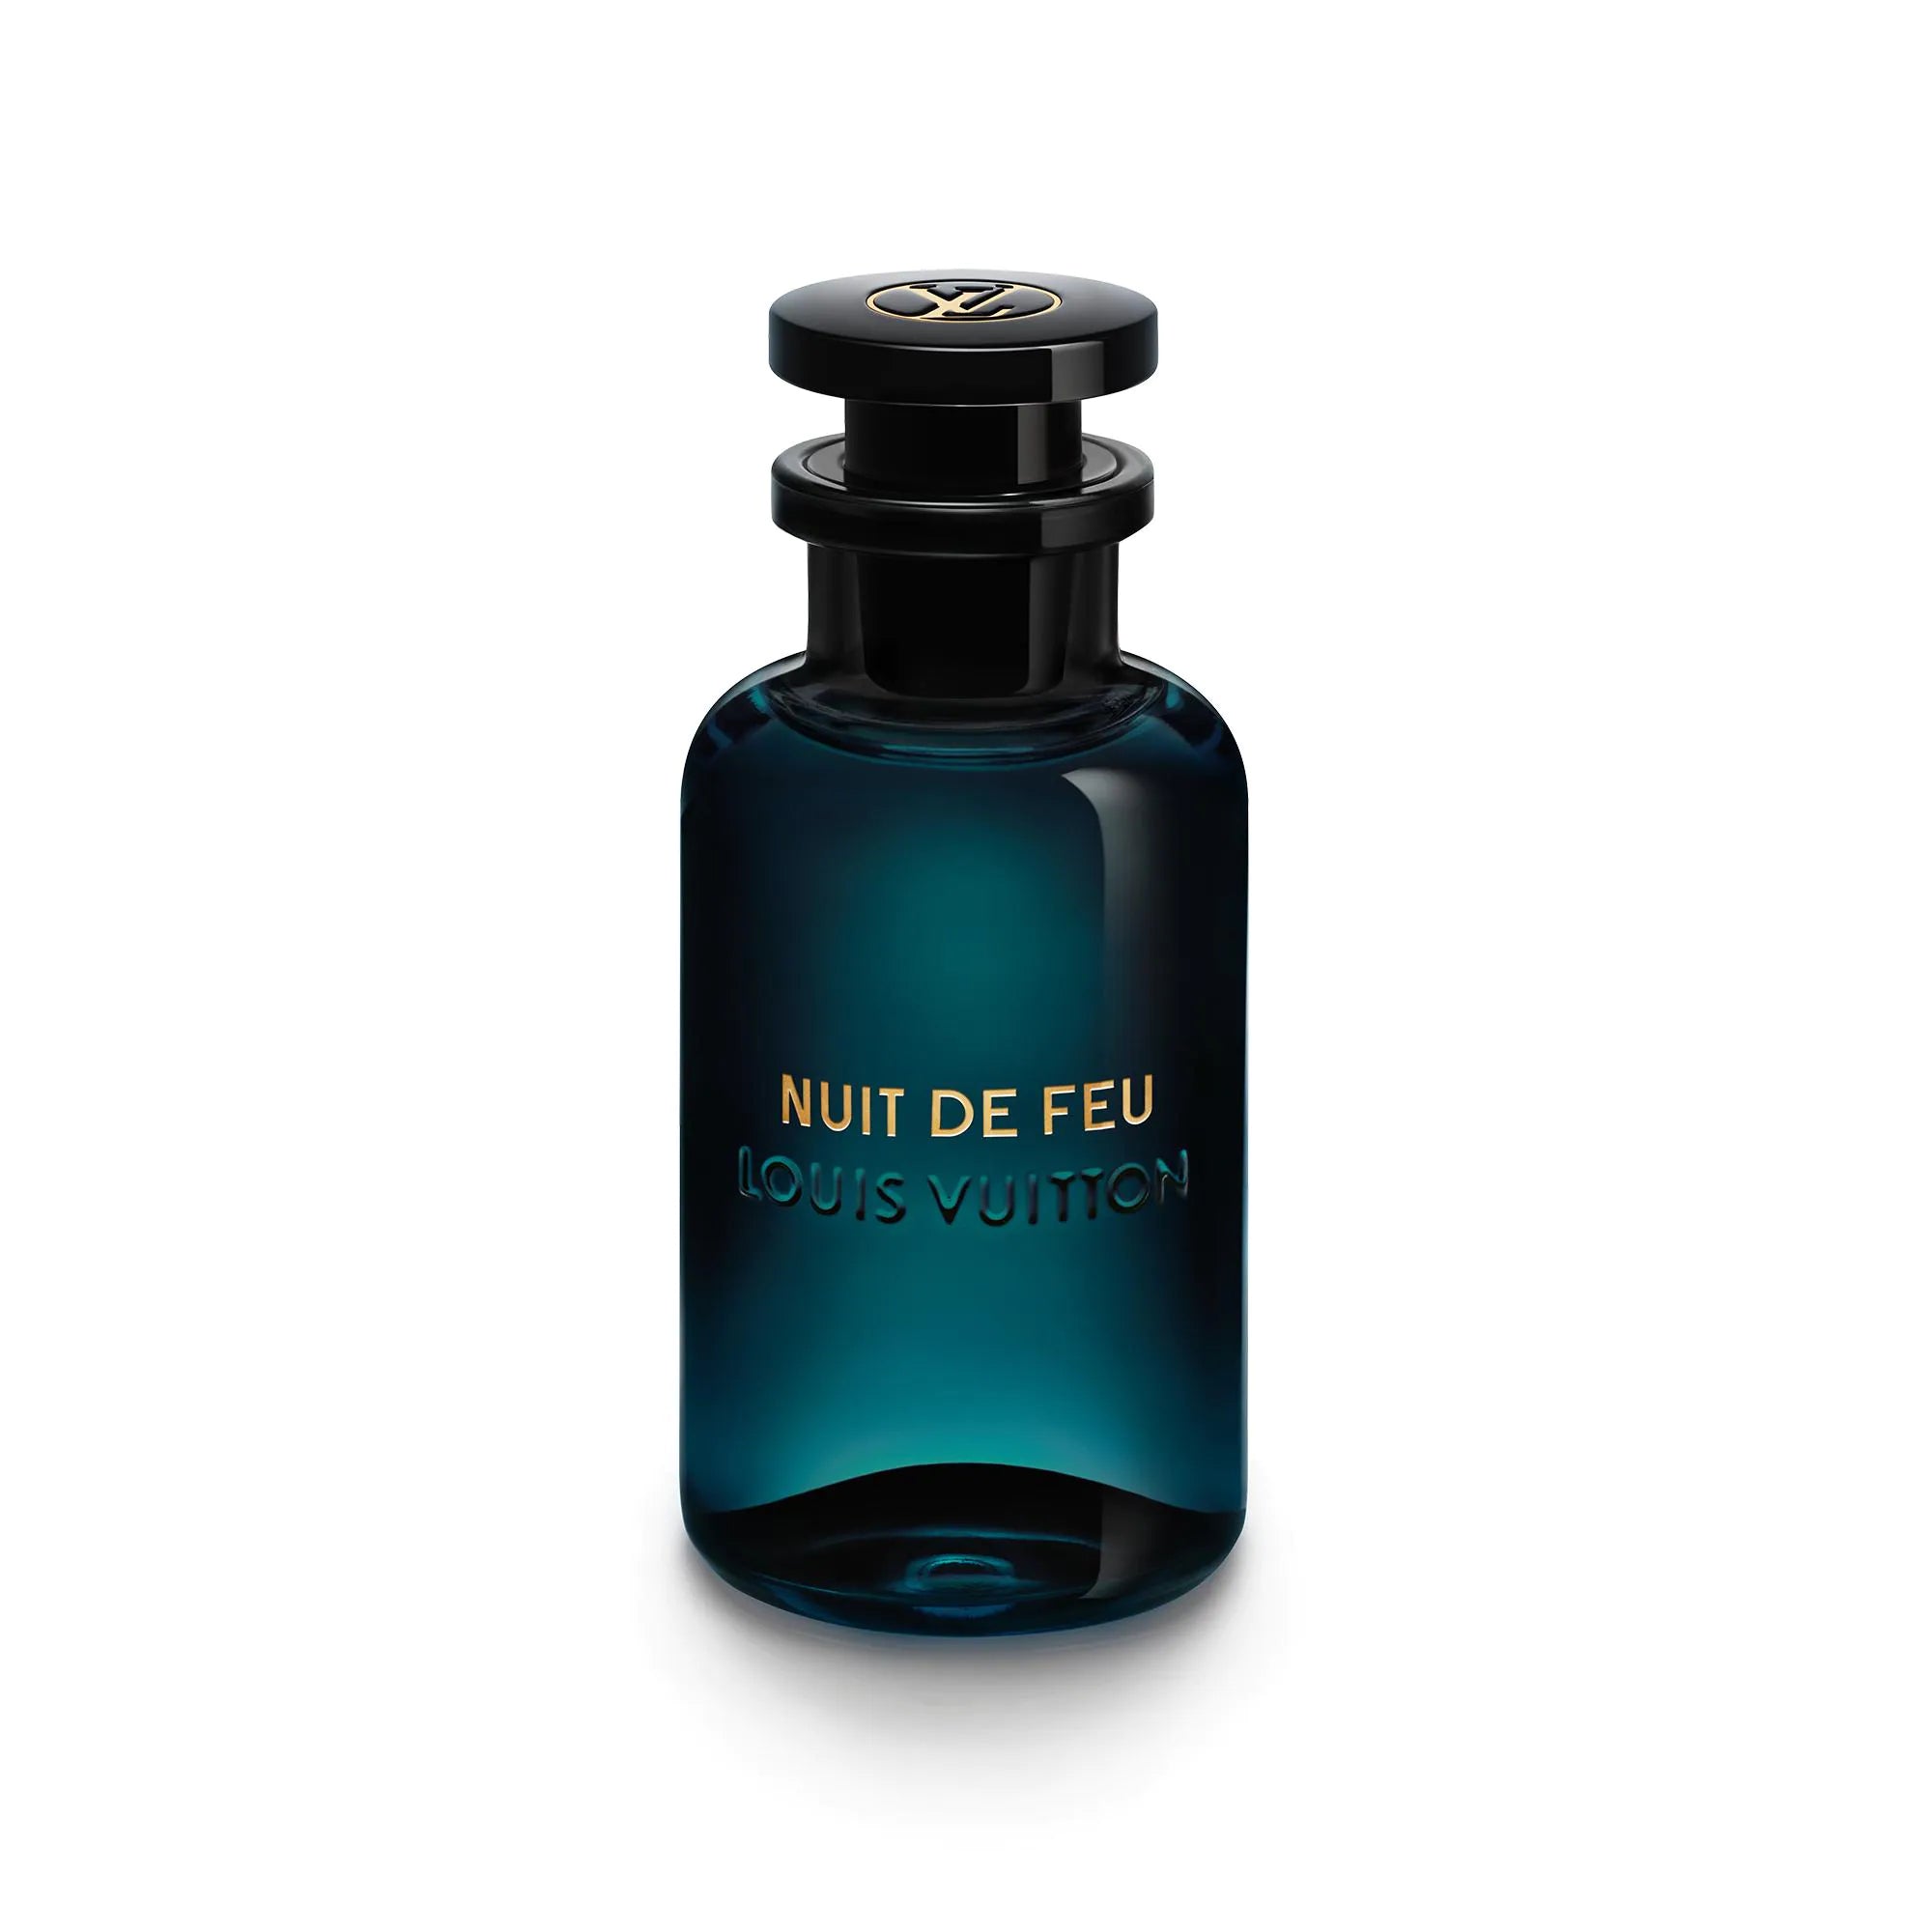 Louis Vuitton Nuit De Feu EDP 100ml Perfume